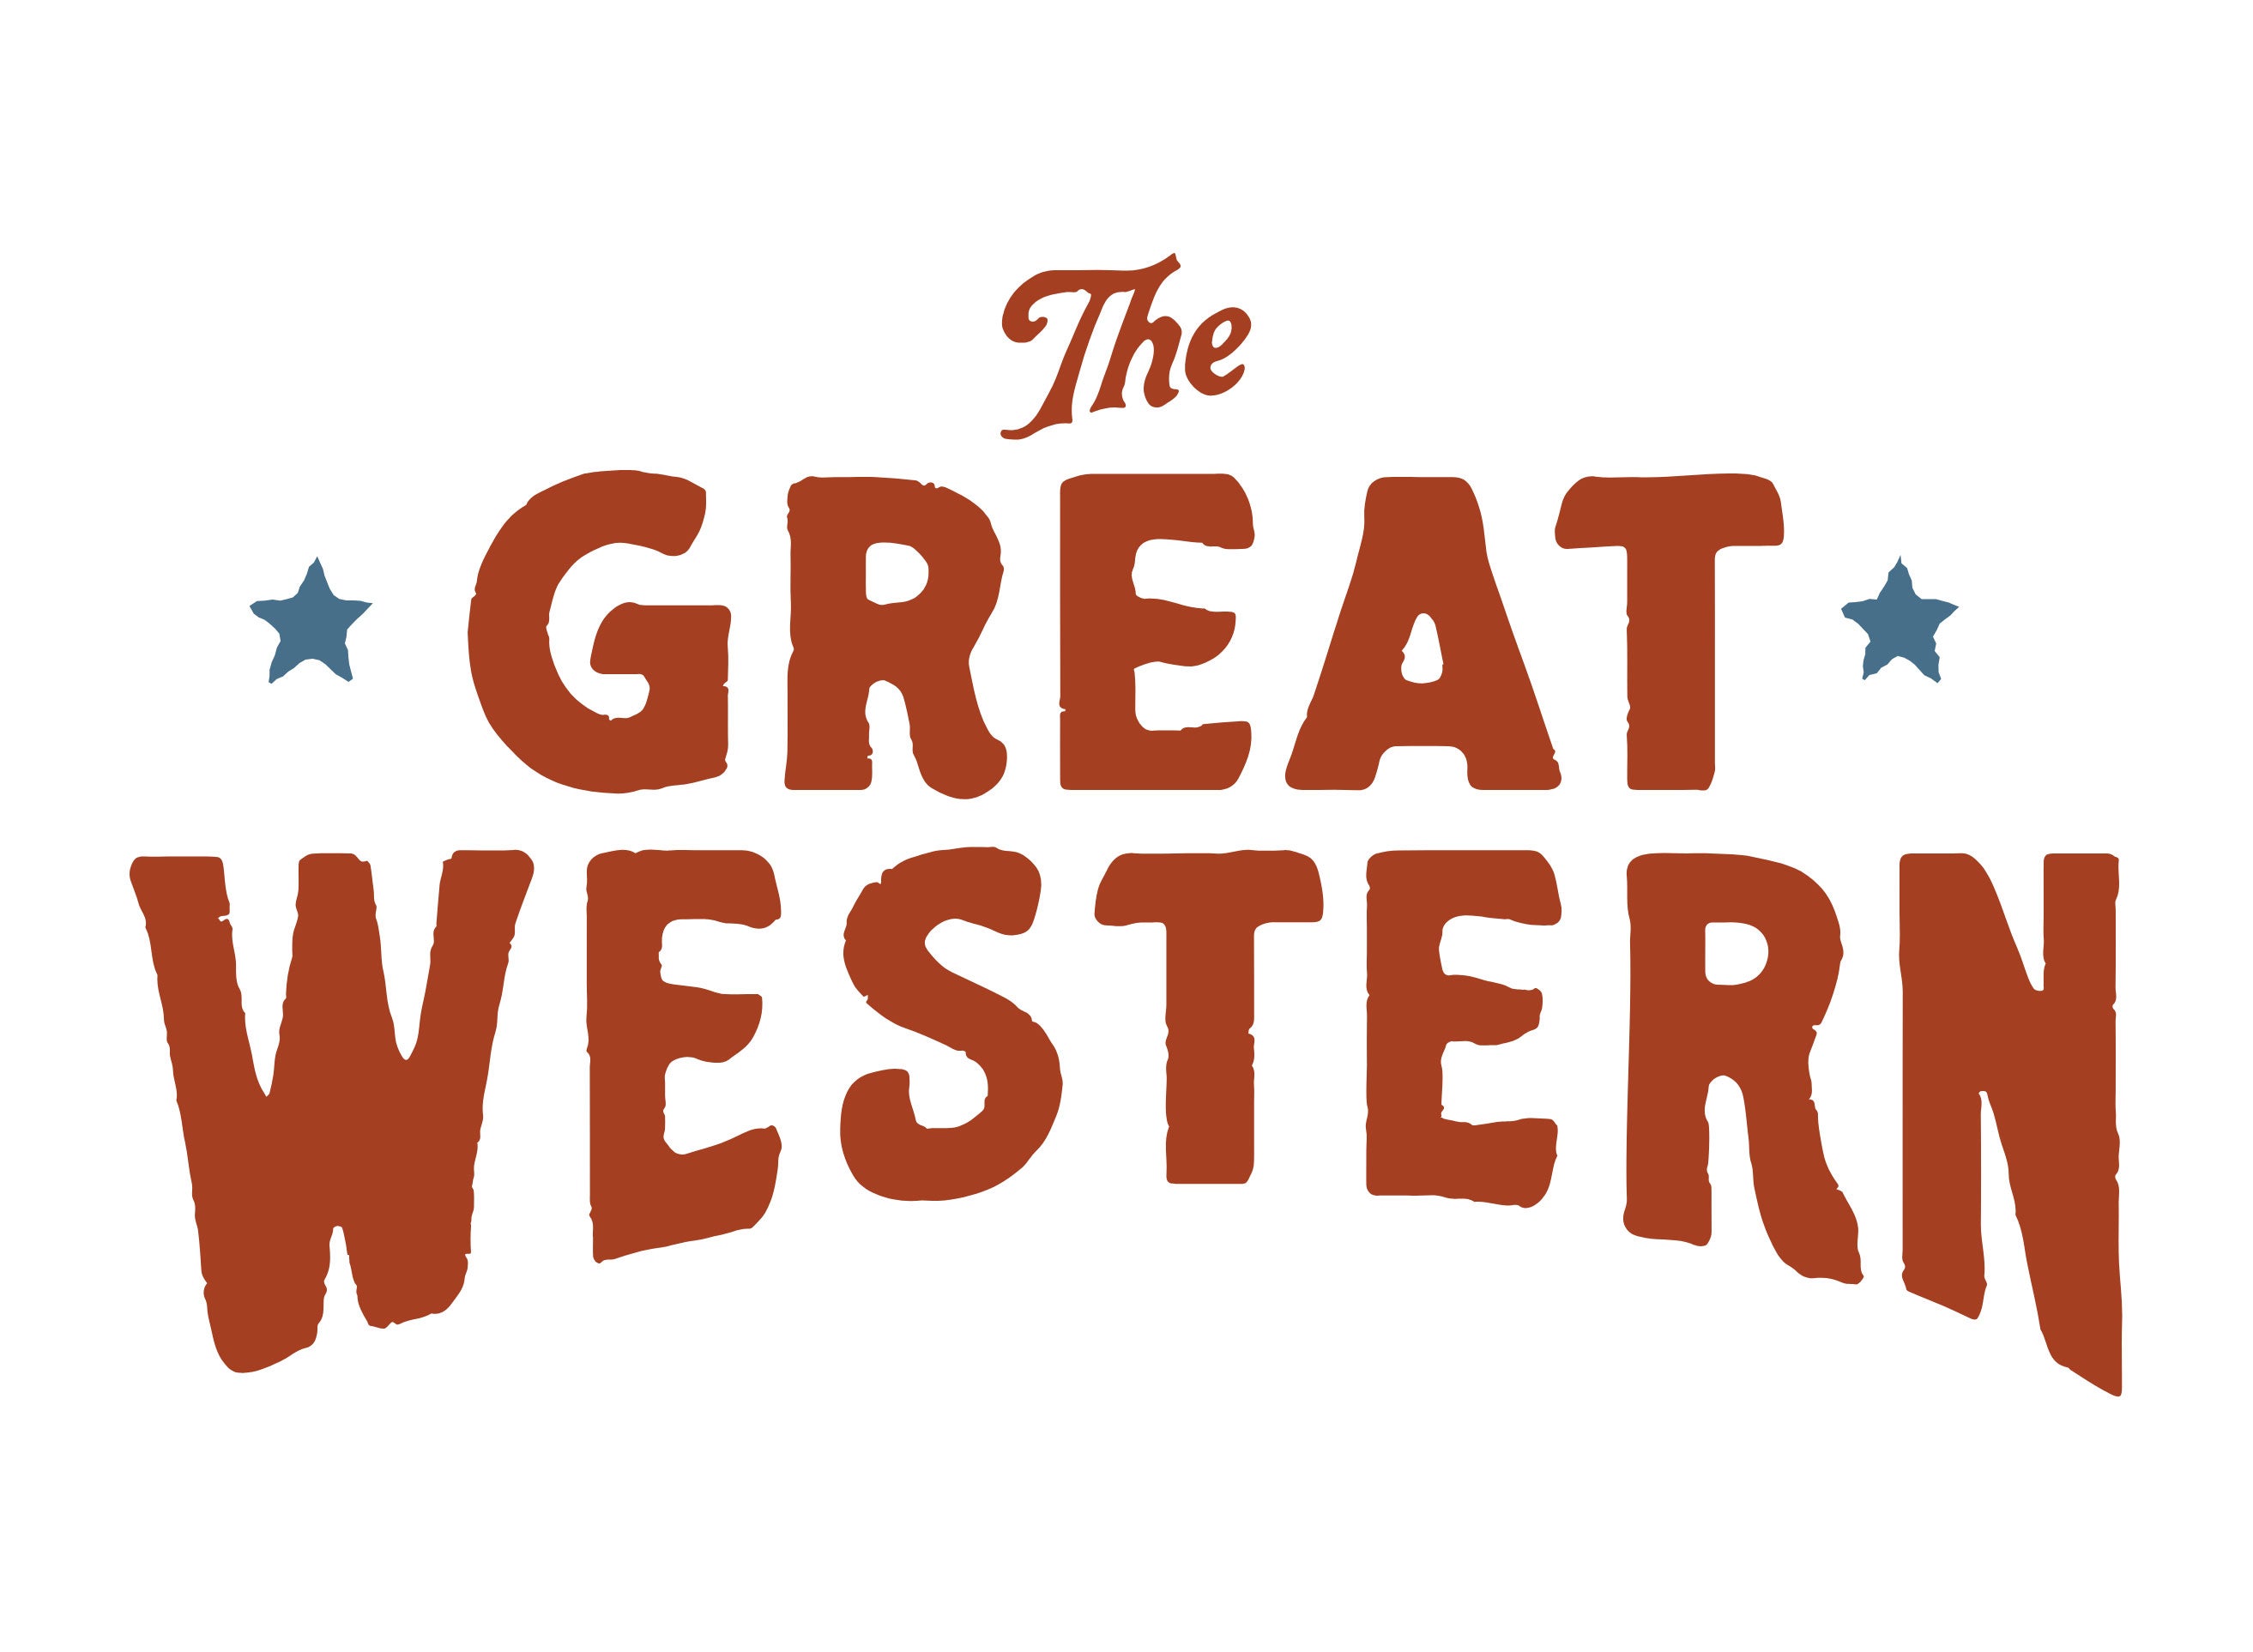 Ryan Bingham's The Great Western